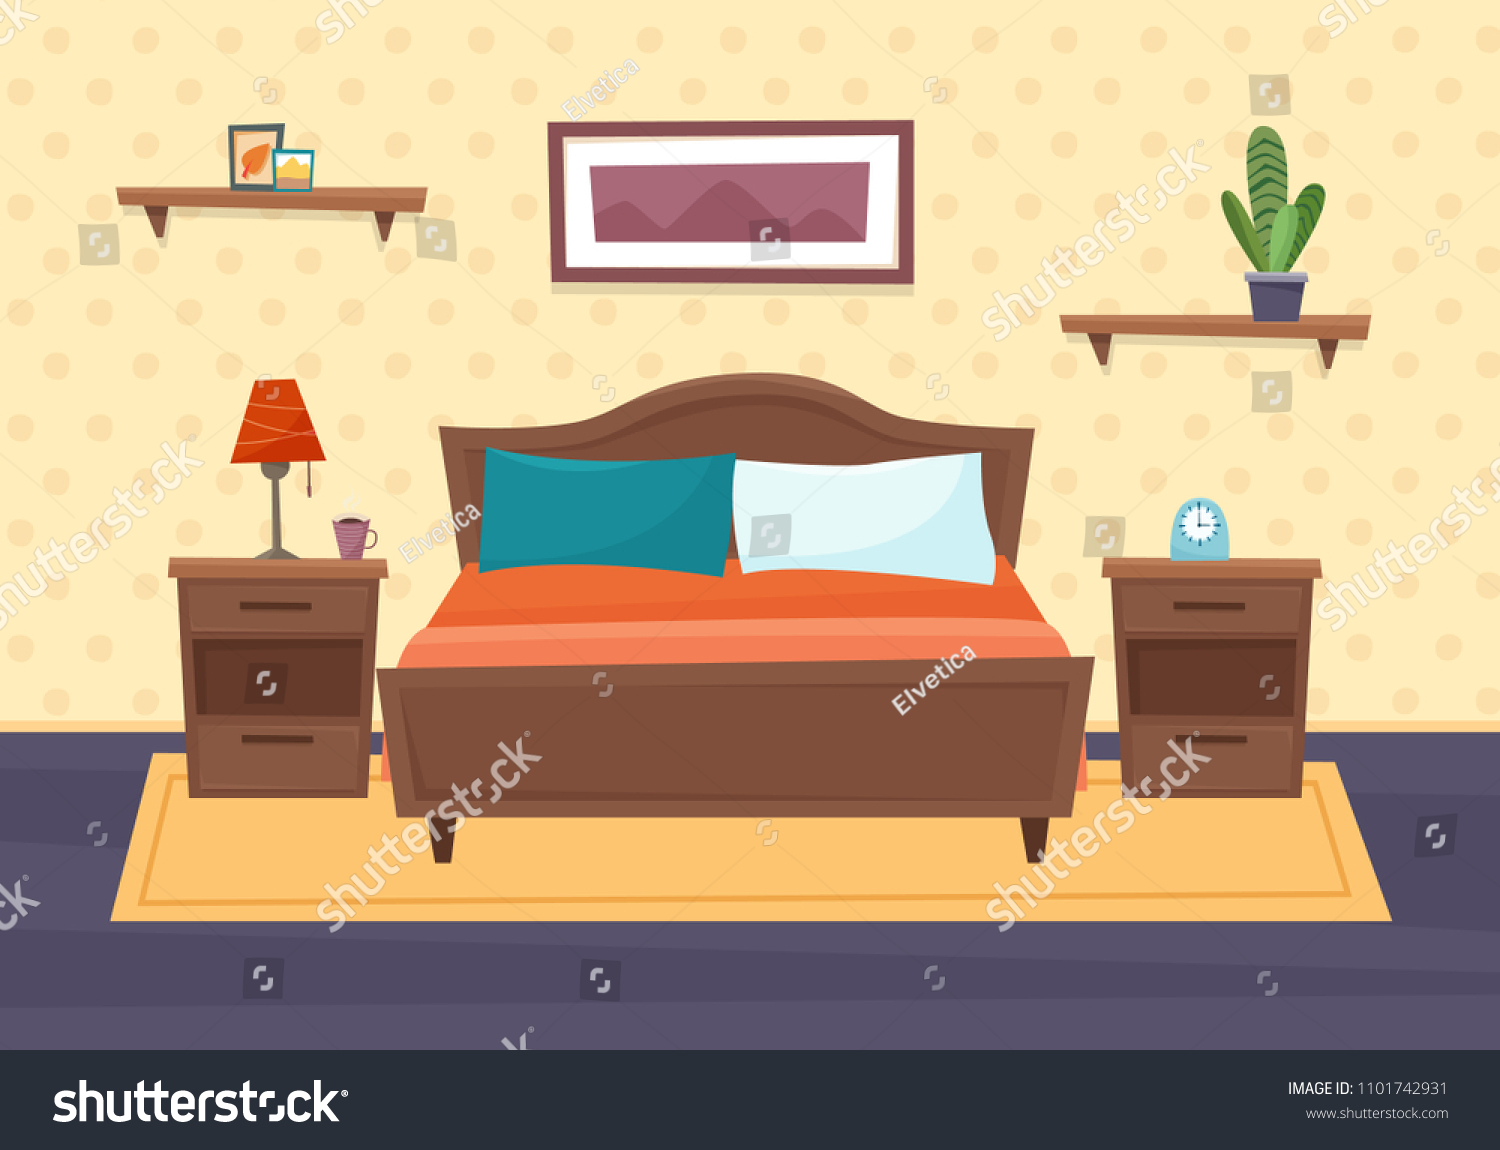 Bedroom Furniture Flat Cartoon Style Vector Stock Vector Royalty Free 1101742931